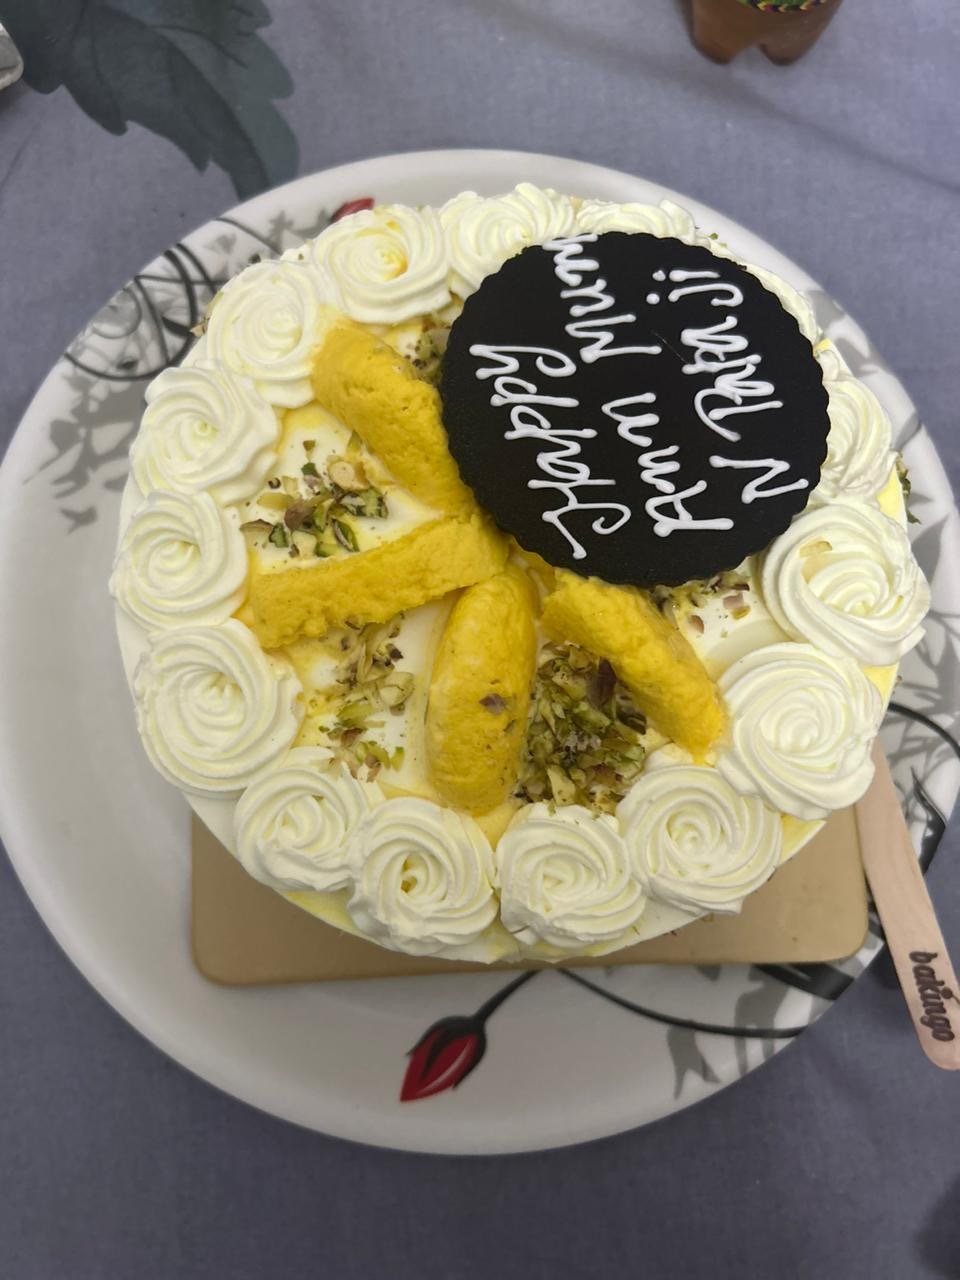 Share more than 148 ganpati bappa cake best